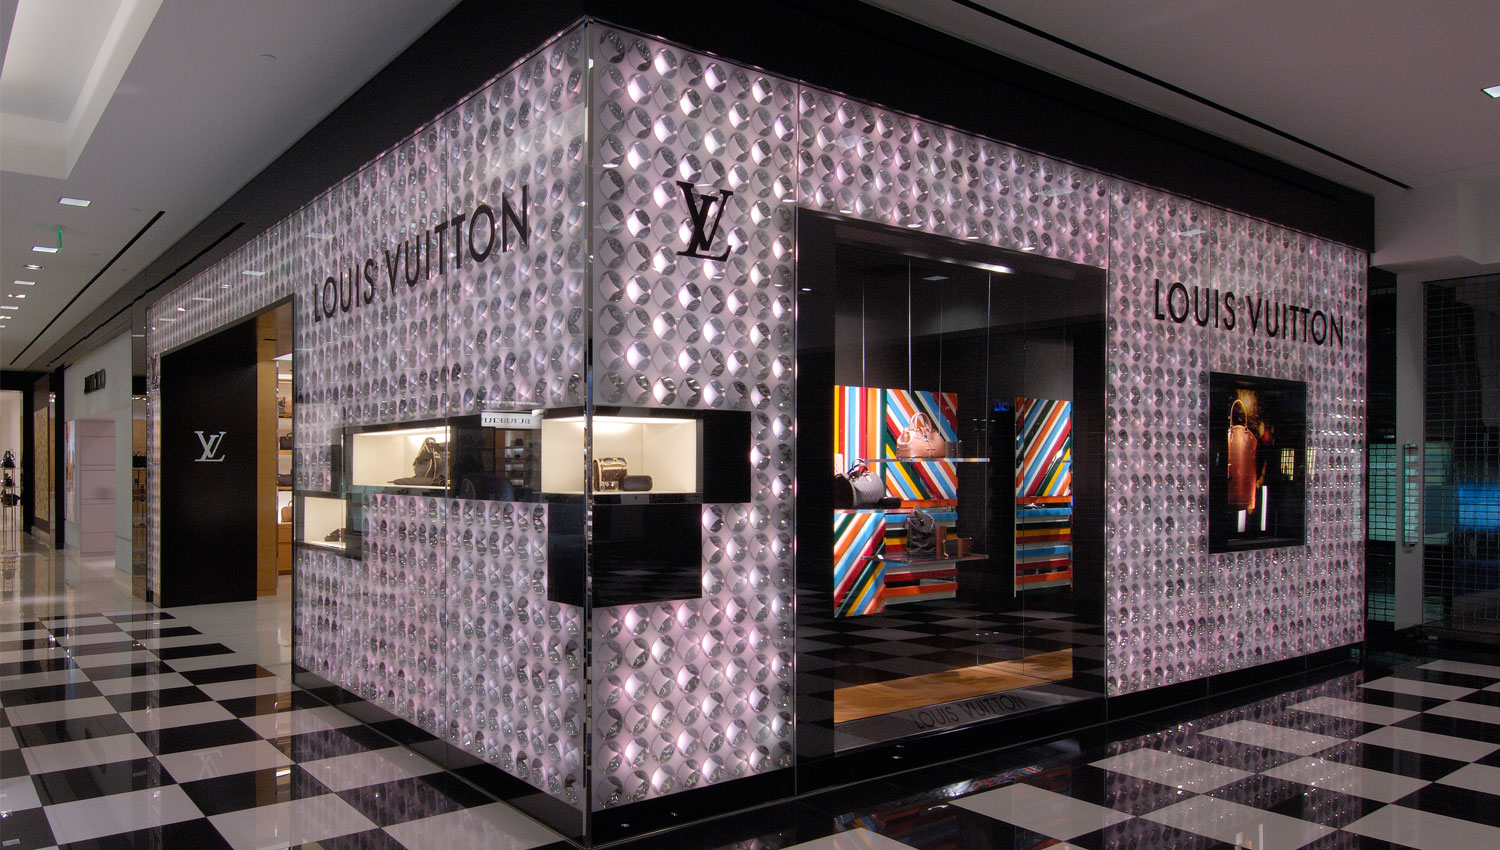 Louis Vuitton - Bloomingdale's